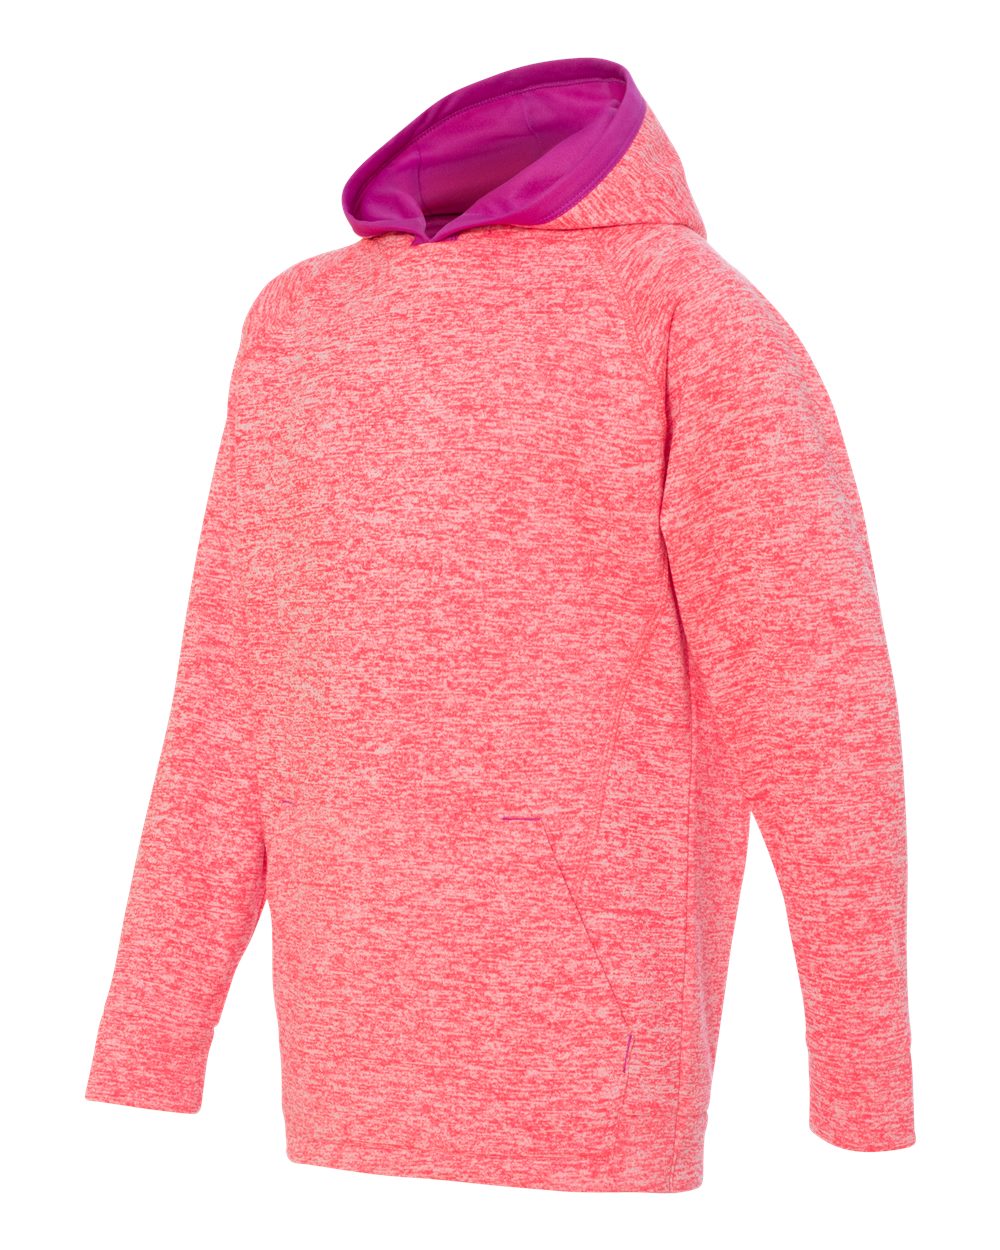 J. America 8610 - Youth Cosmic Fleece Hooded Pullover Sweatshirt